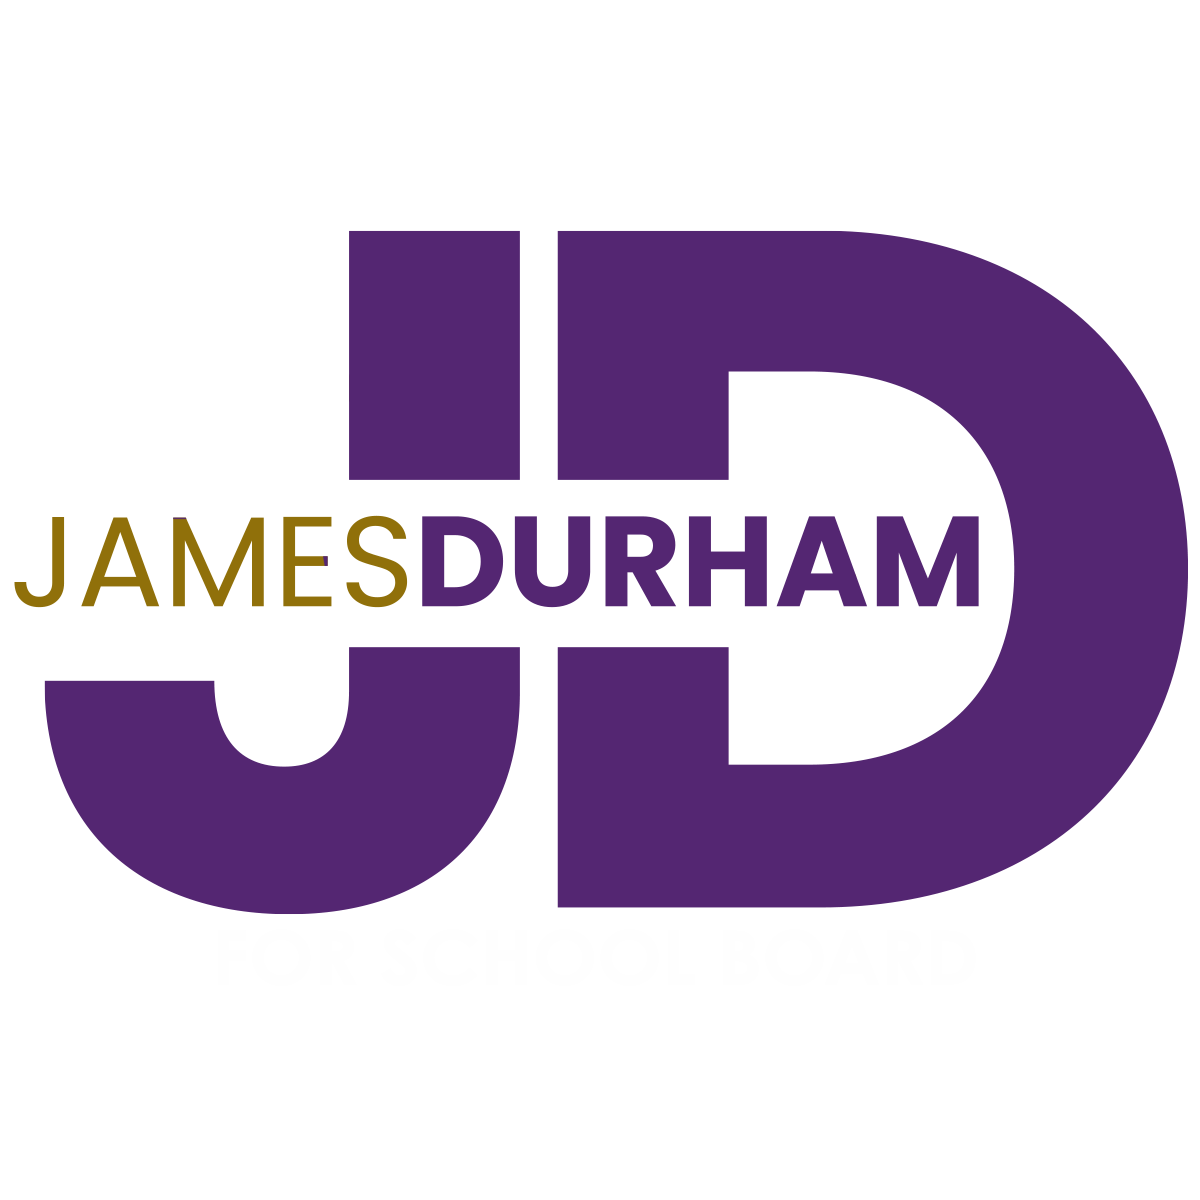 James Durham for School Board